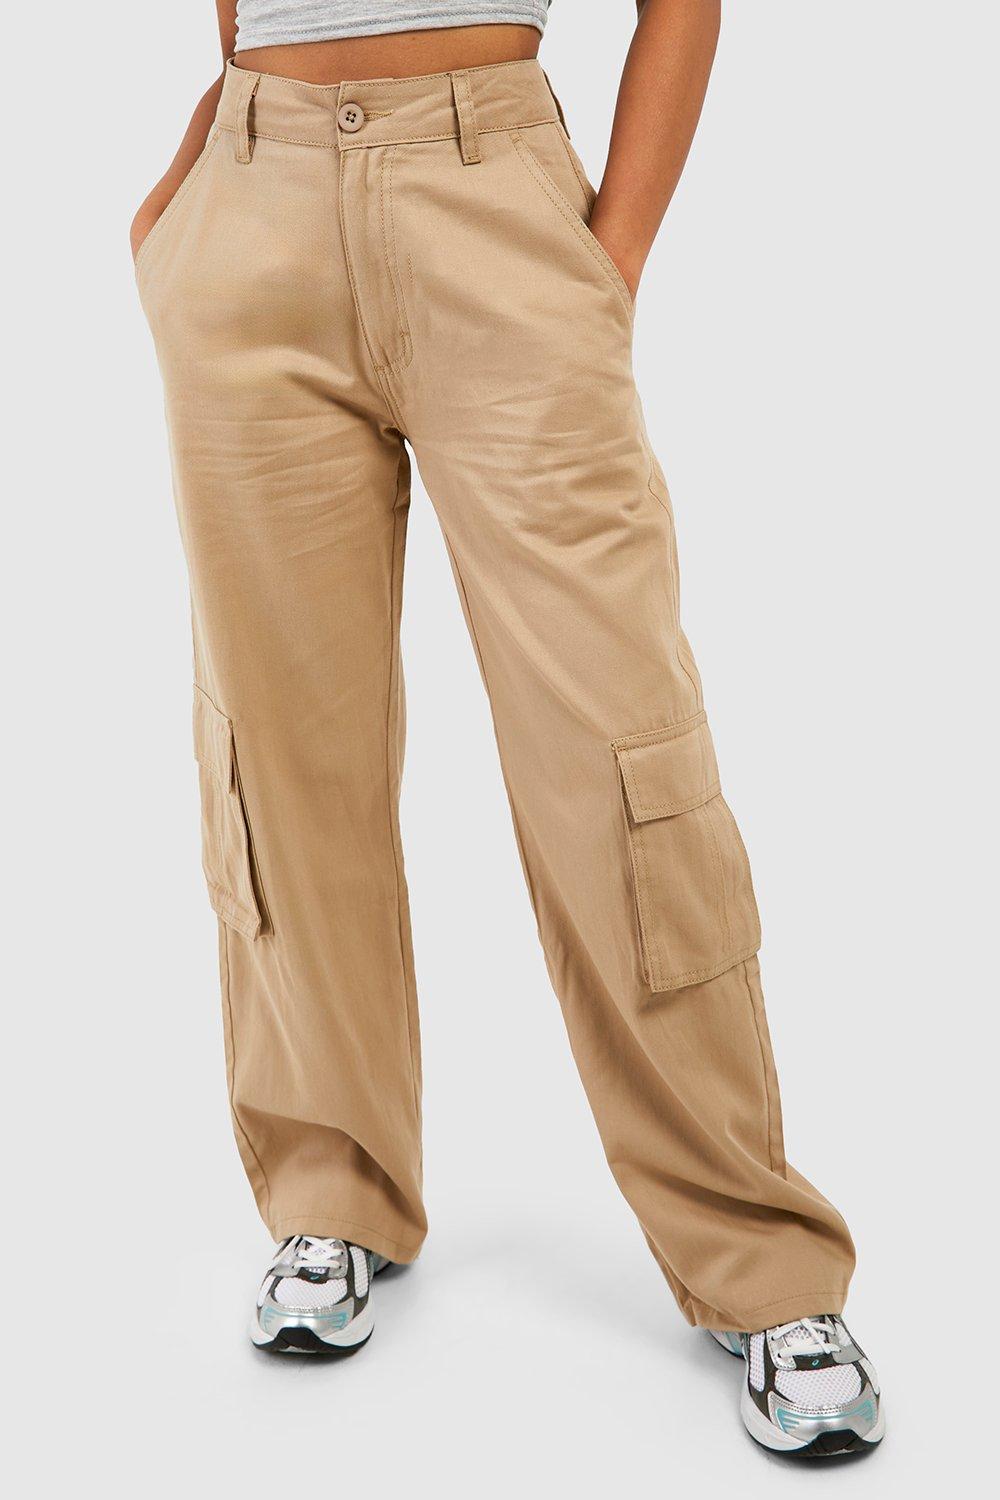 Women's Straight Wide Legs Cargo Pants Midi Waist Bottoms Four Pockets